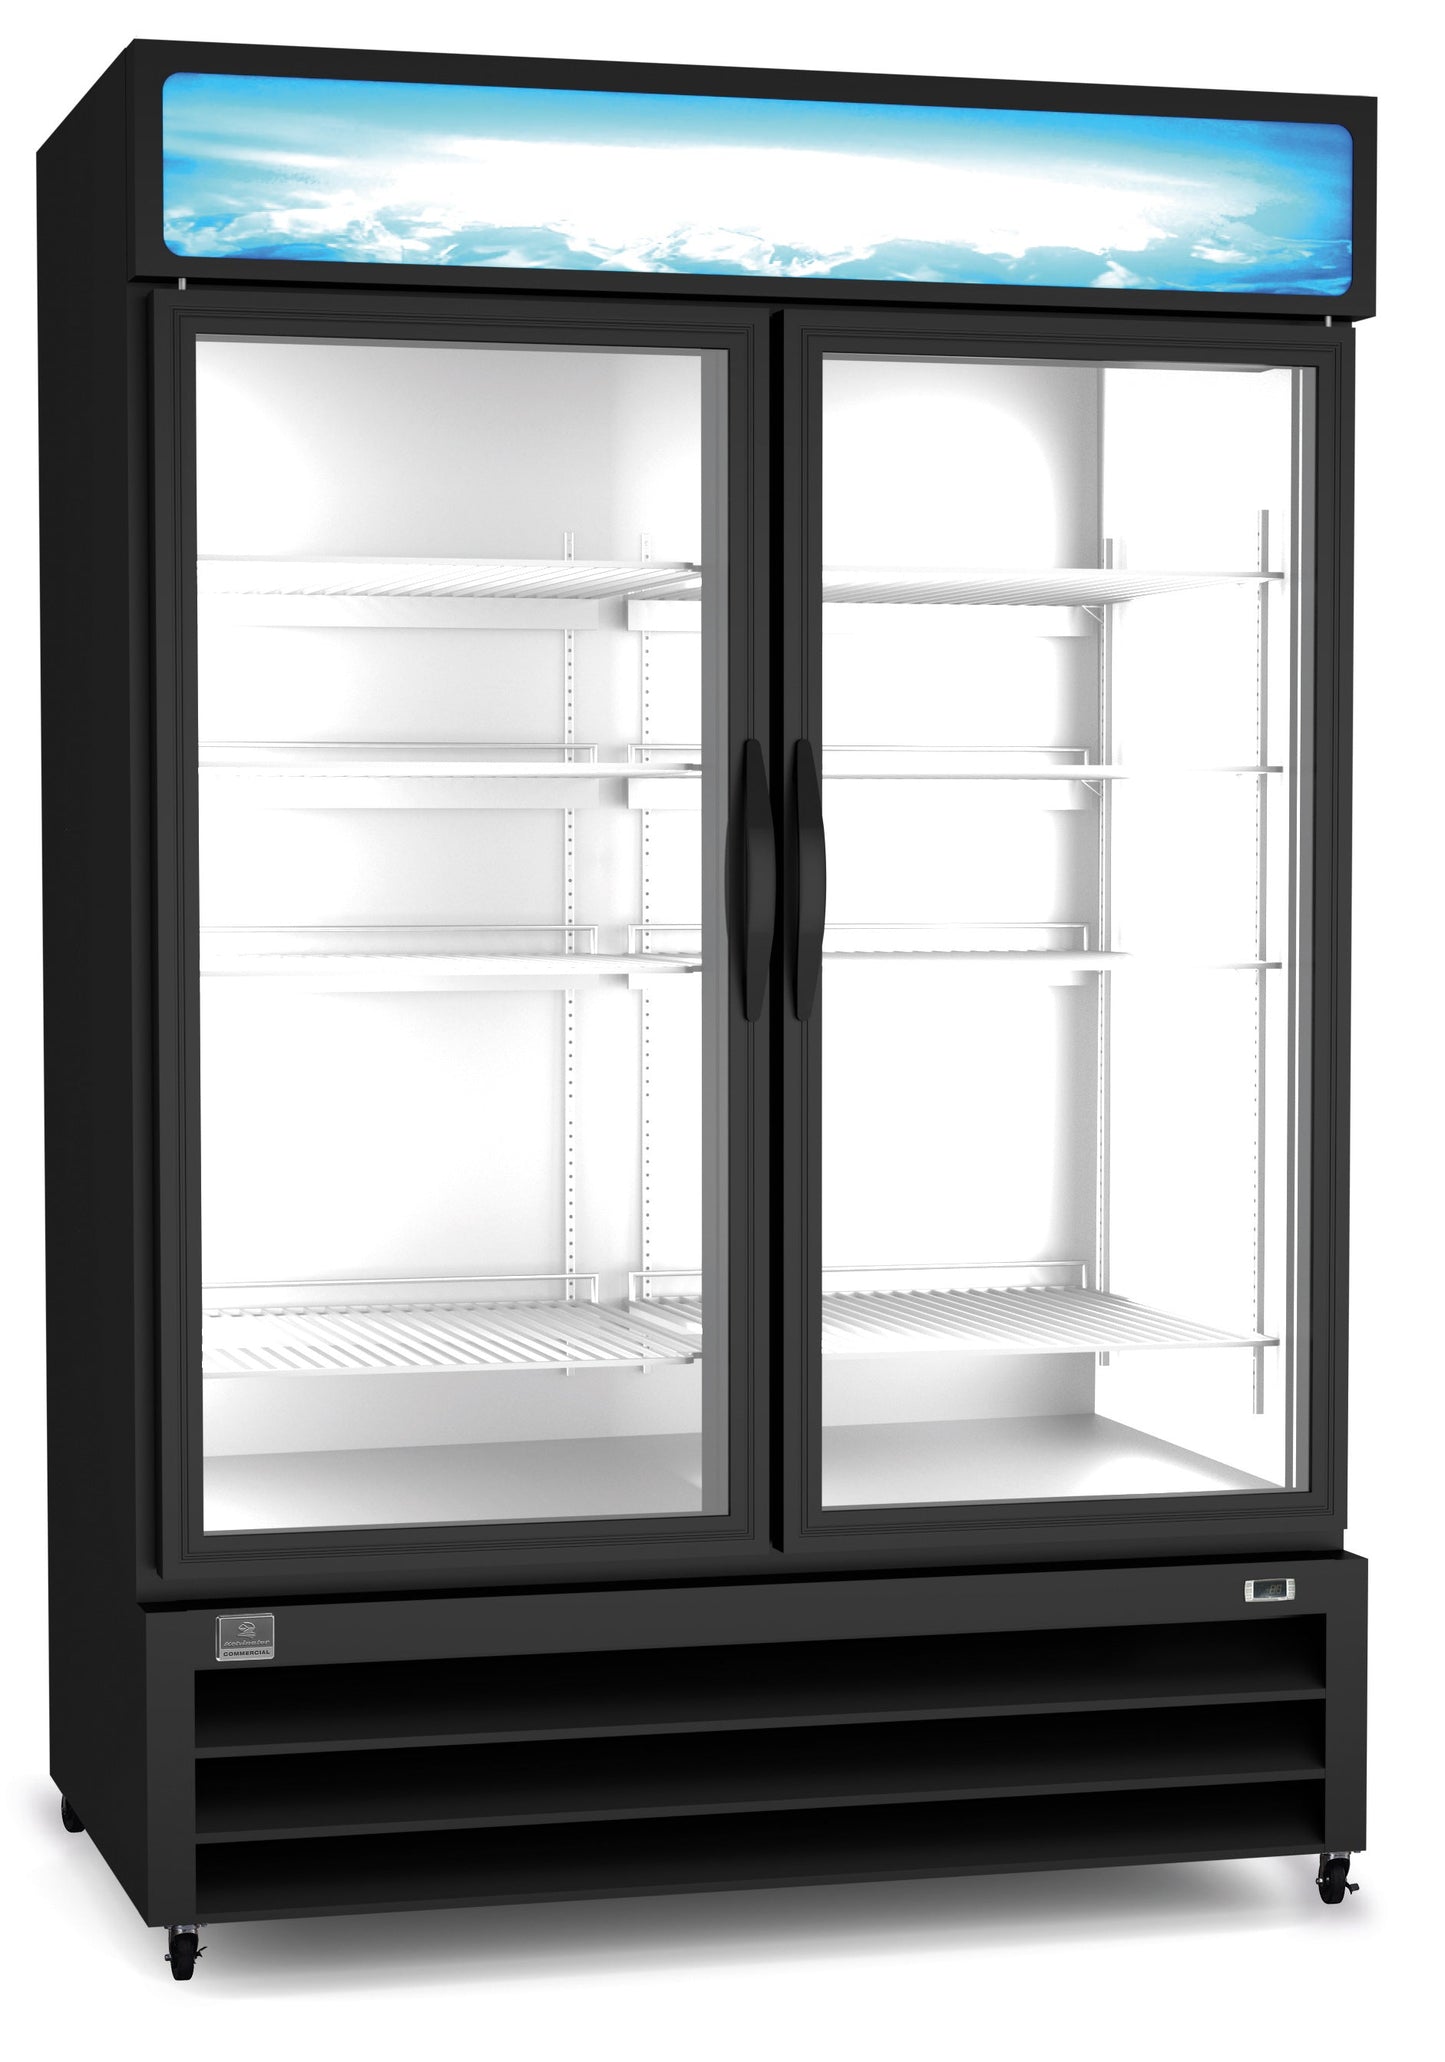 Refrigerated Merchandiser Kelvinator Commercial Model KCHGM48R